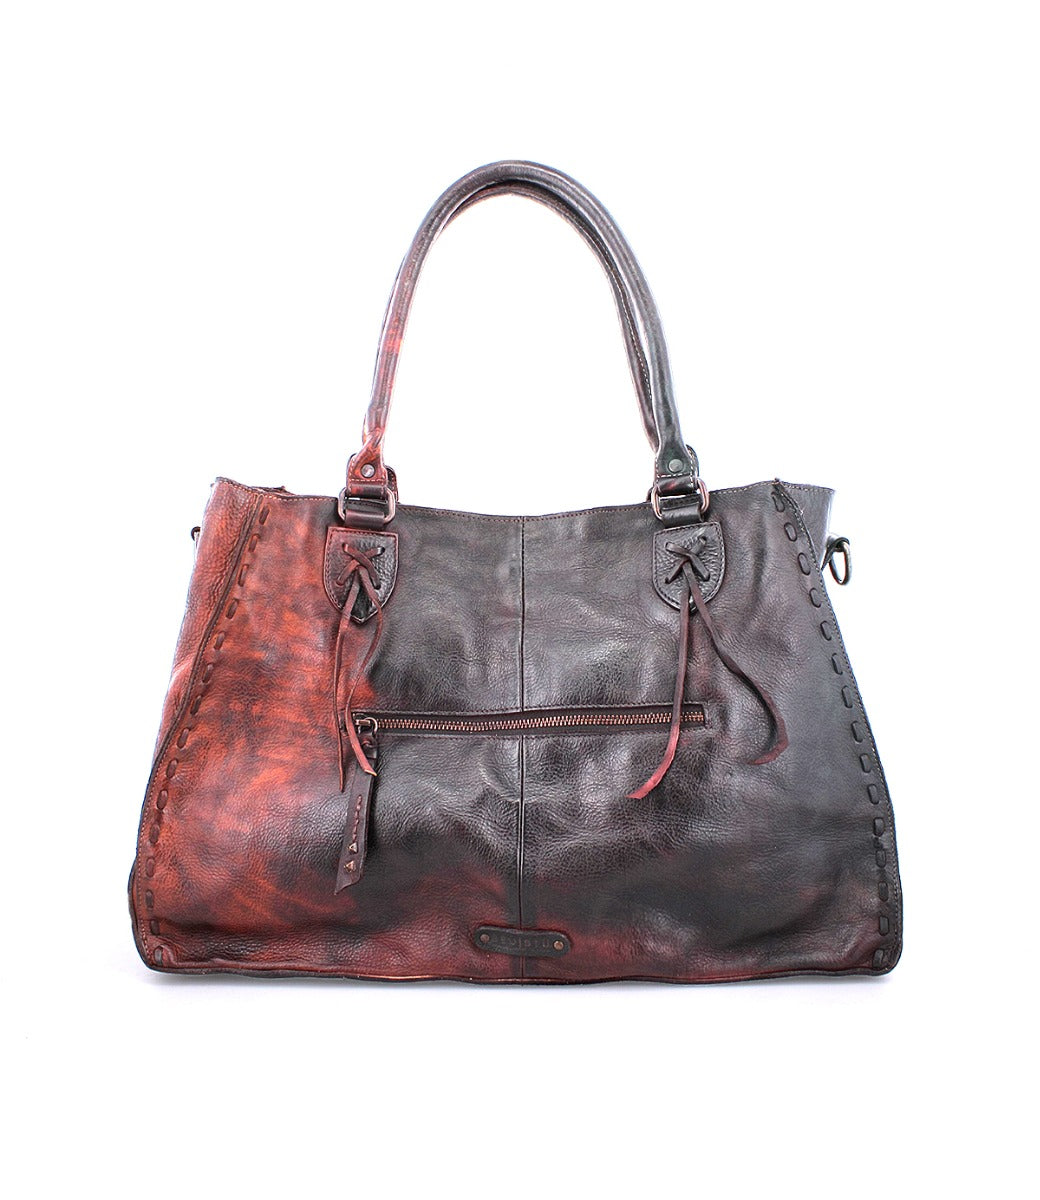 A black and brown Rockaway leather handbag by Bed Stu.